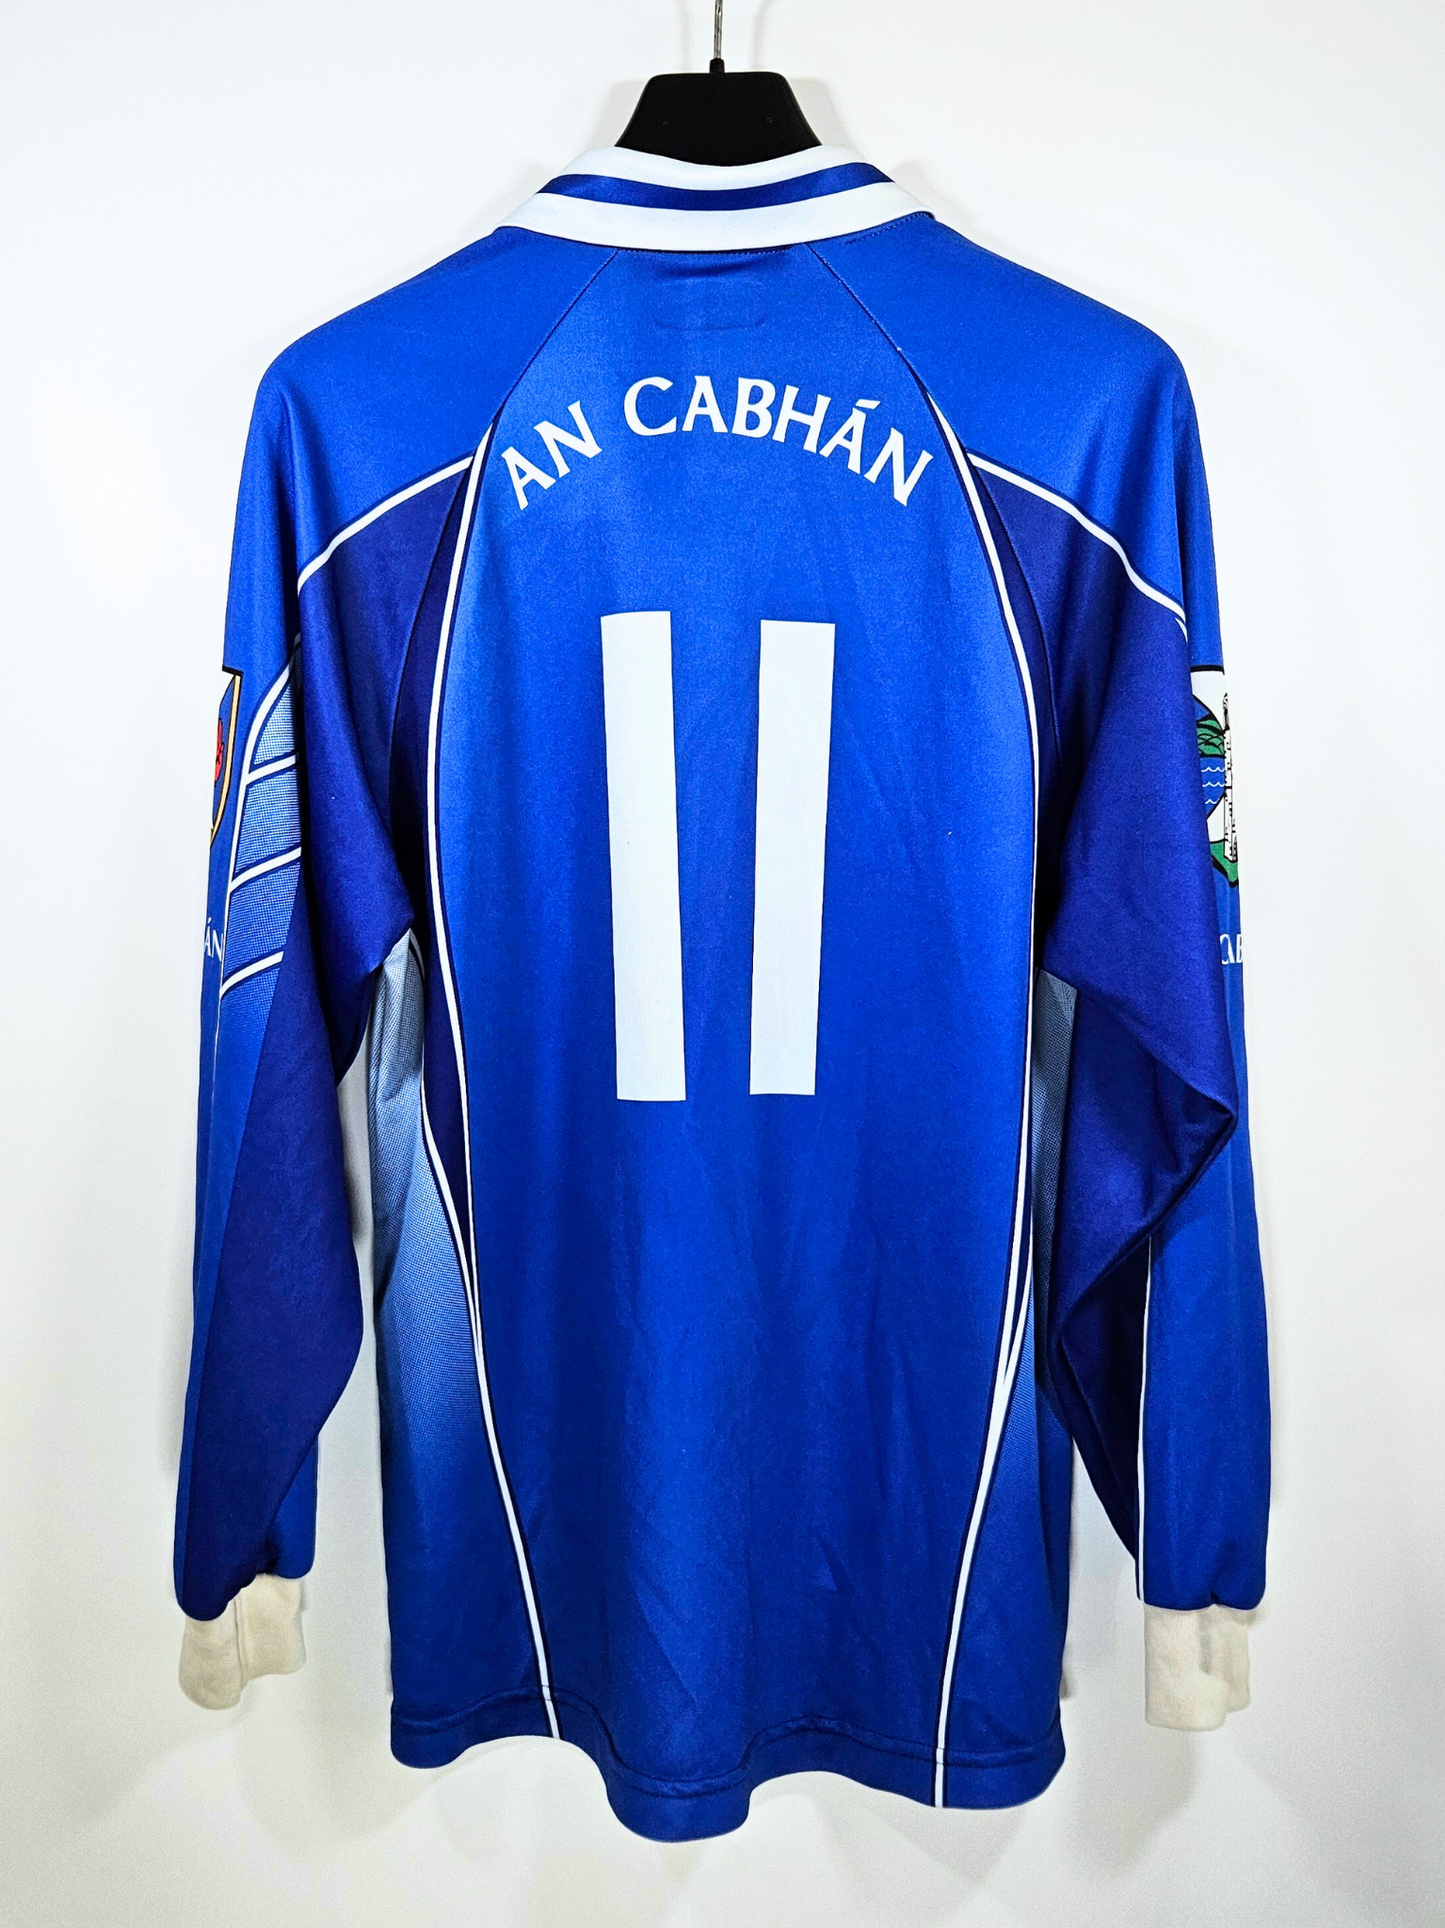 Cavan 2008 (L) - Match Worn #11